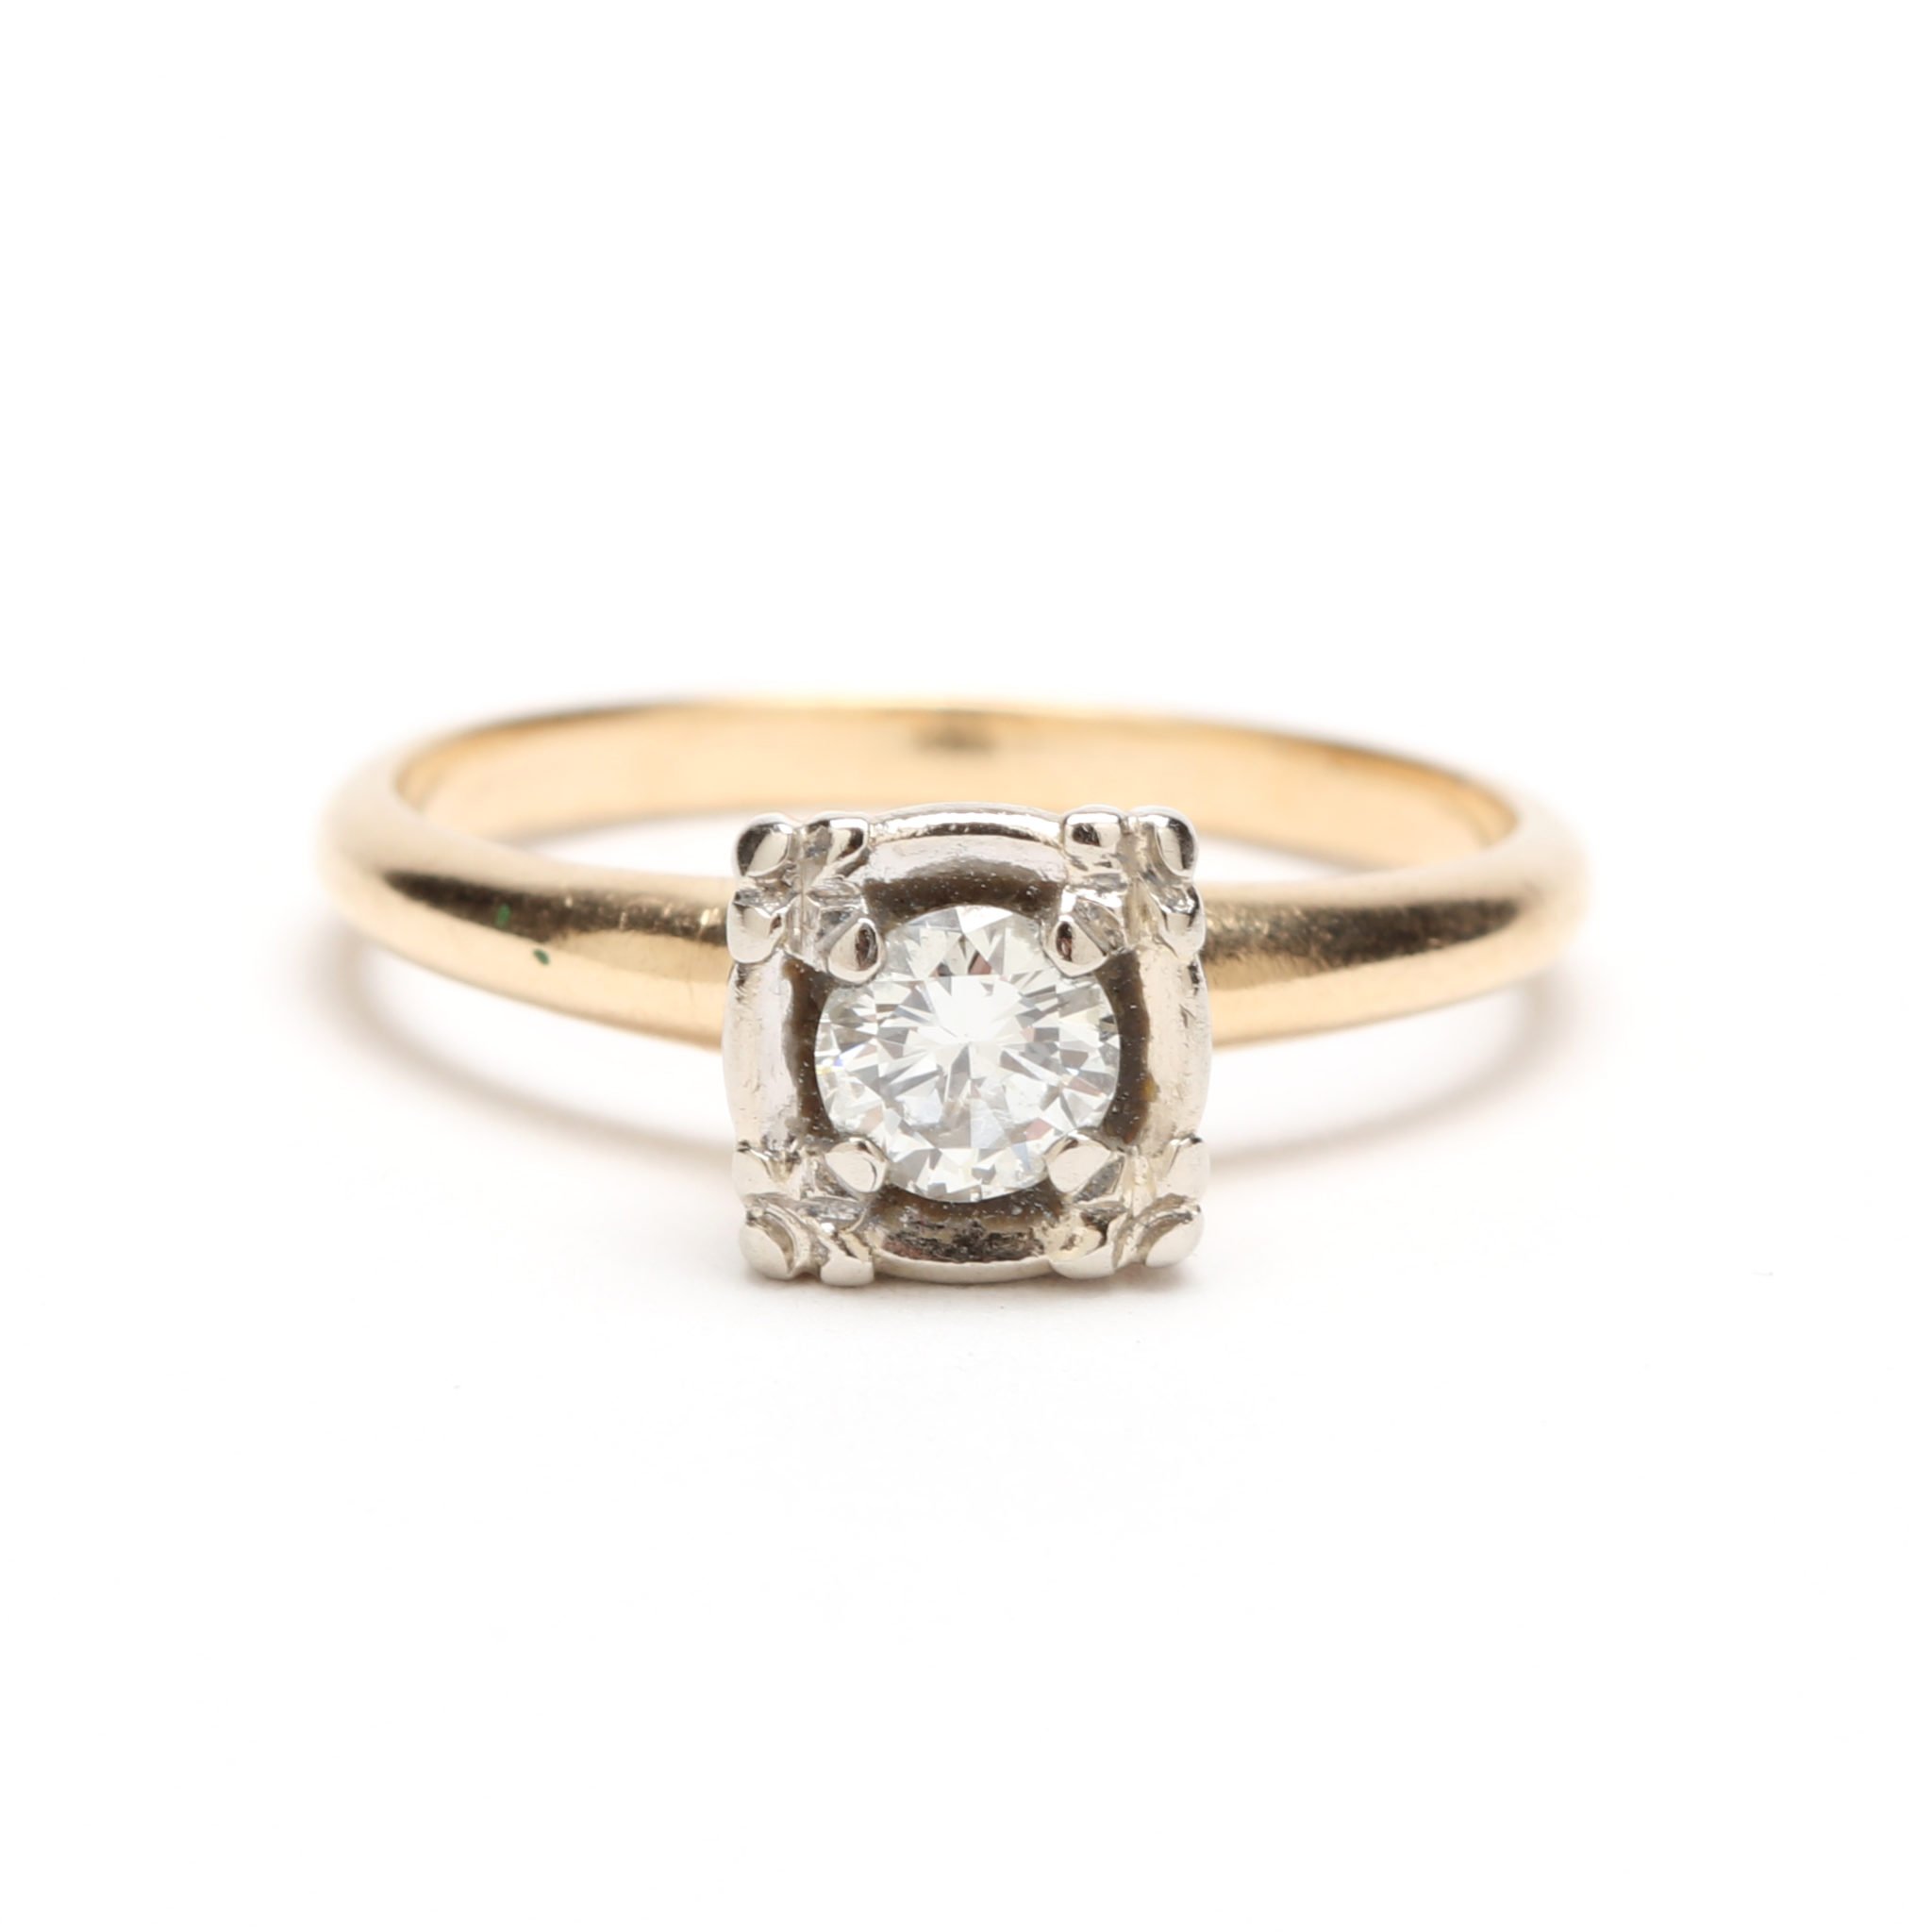 Antique Art Deco 14kt yellow & white gold .30ct Diamond Engagement Ring